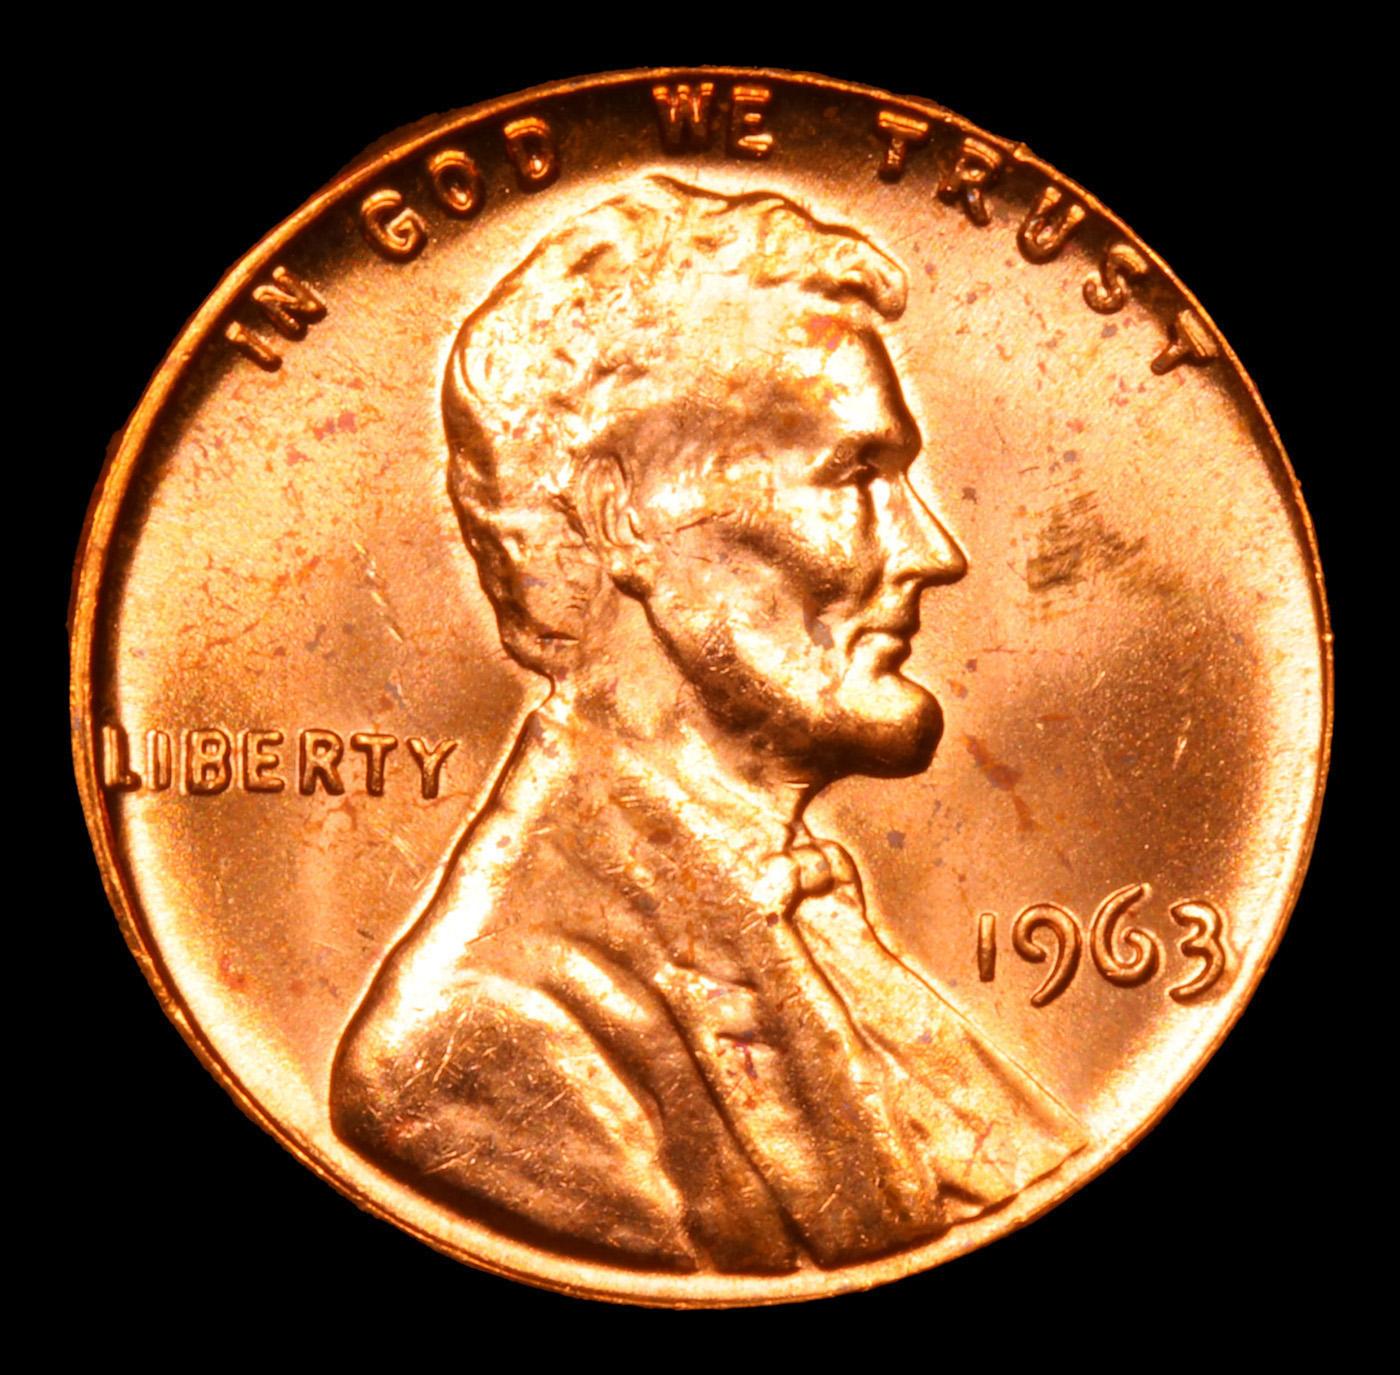 1963-p Lincoln Cent 1c Grades GEM++ RD